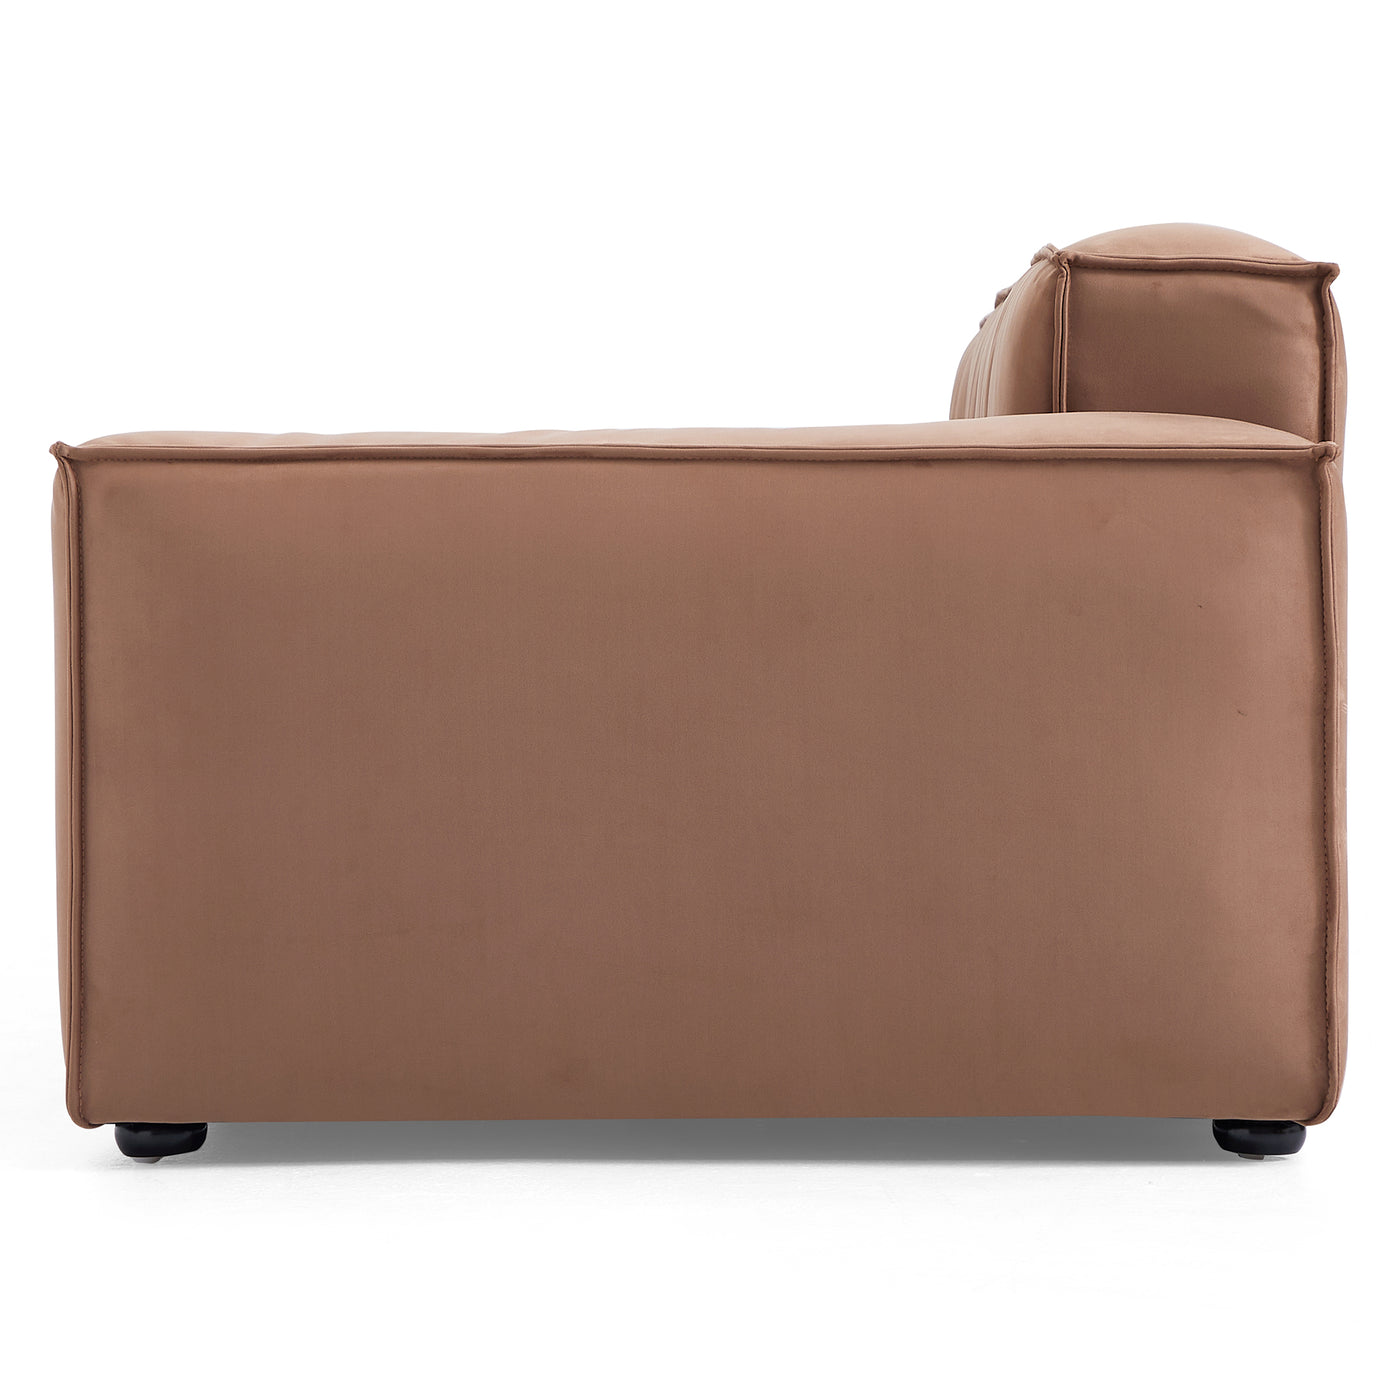 Luxury Minimalist Brown Fabric Sofa-Brown